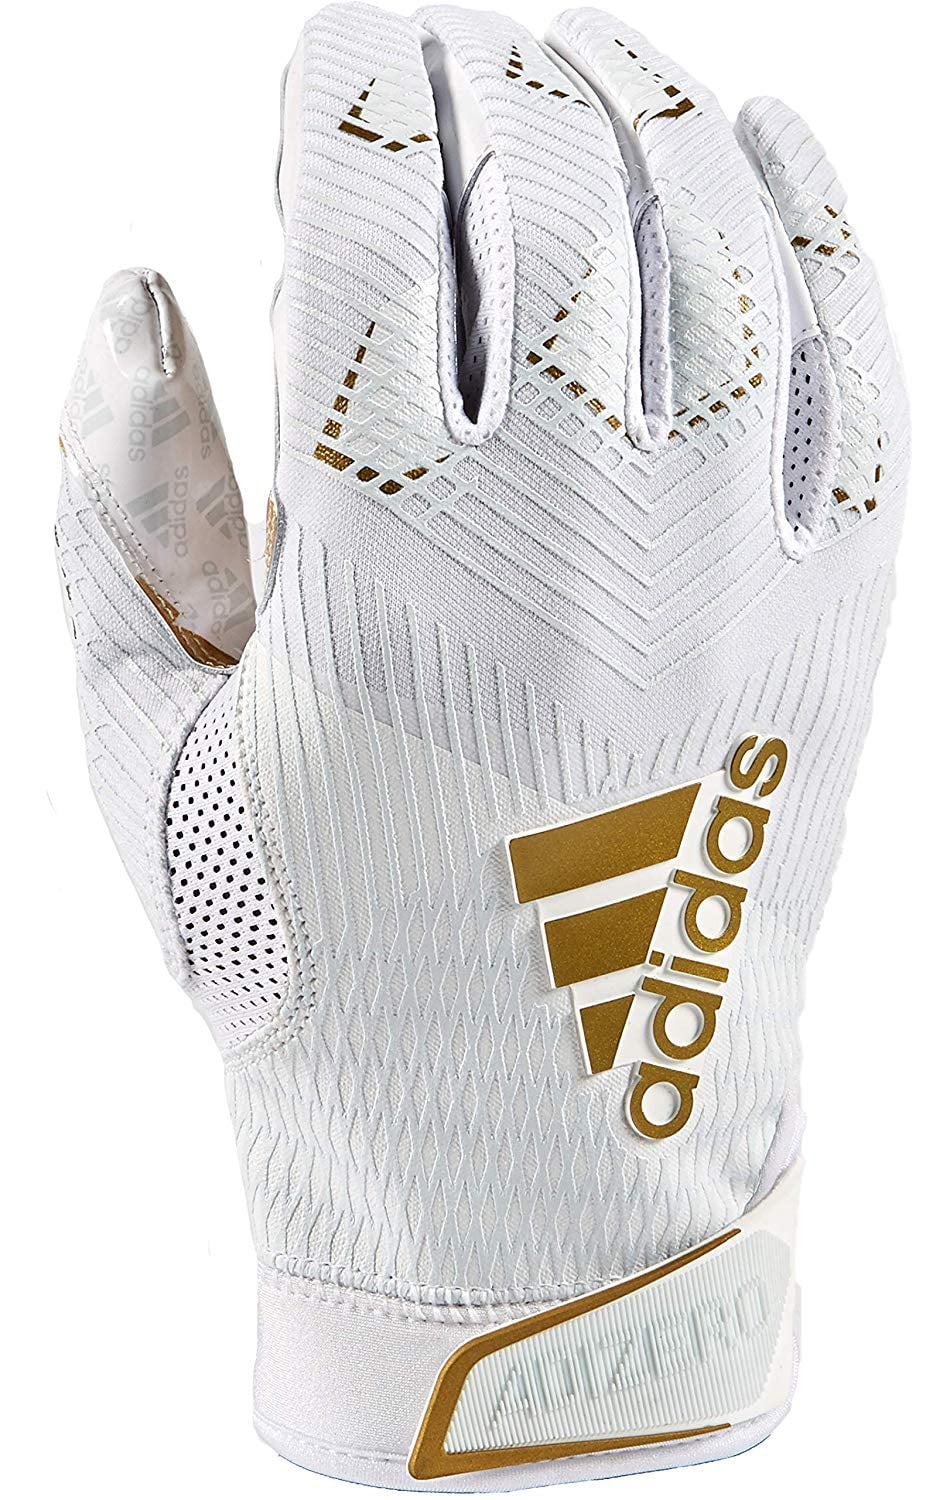 adidas freak 4.0 football gloves